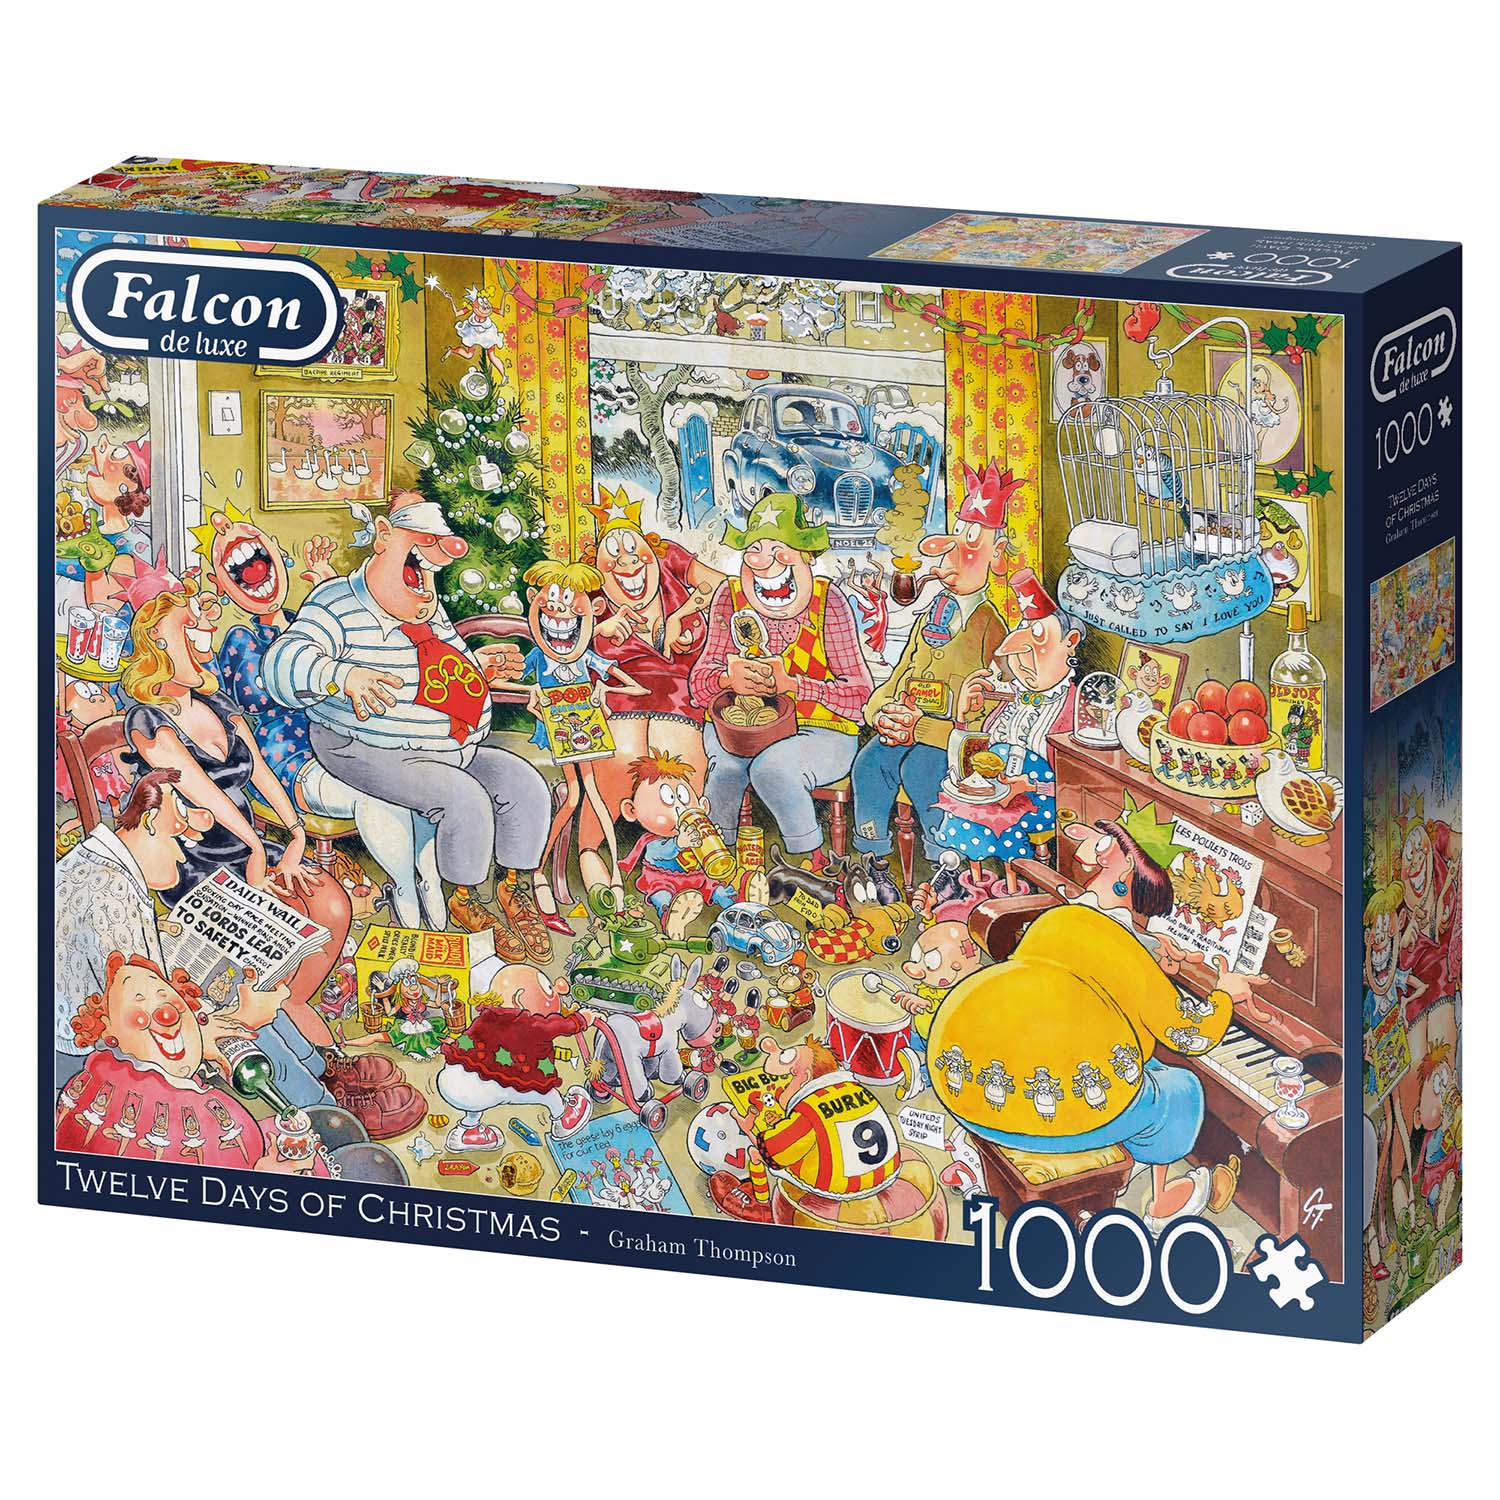 Twelve Days of Christmas, 1000 Pieces, Falcon | Puzzle Warehouse